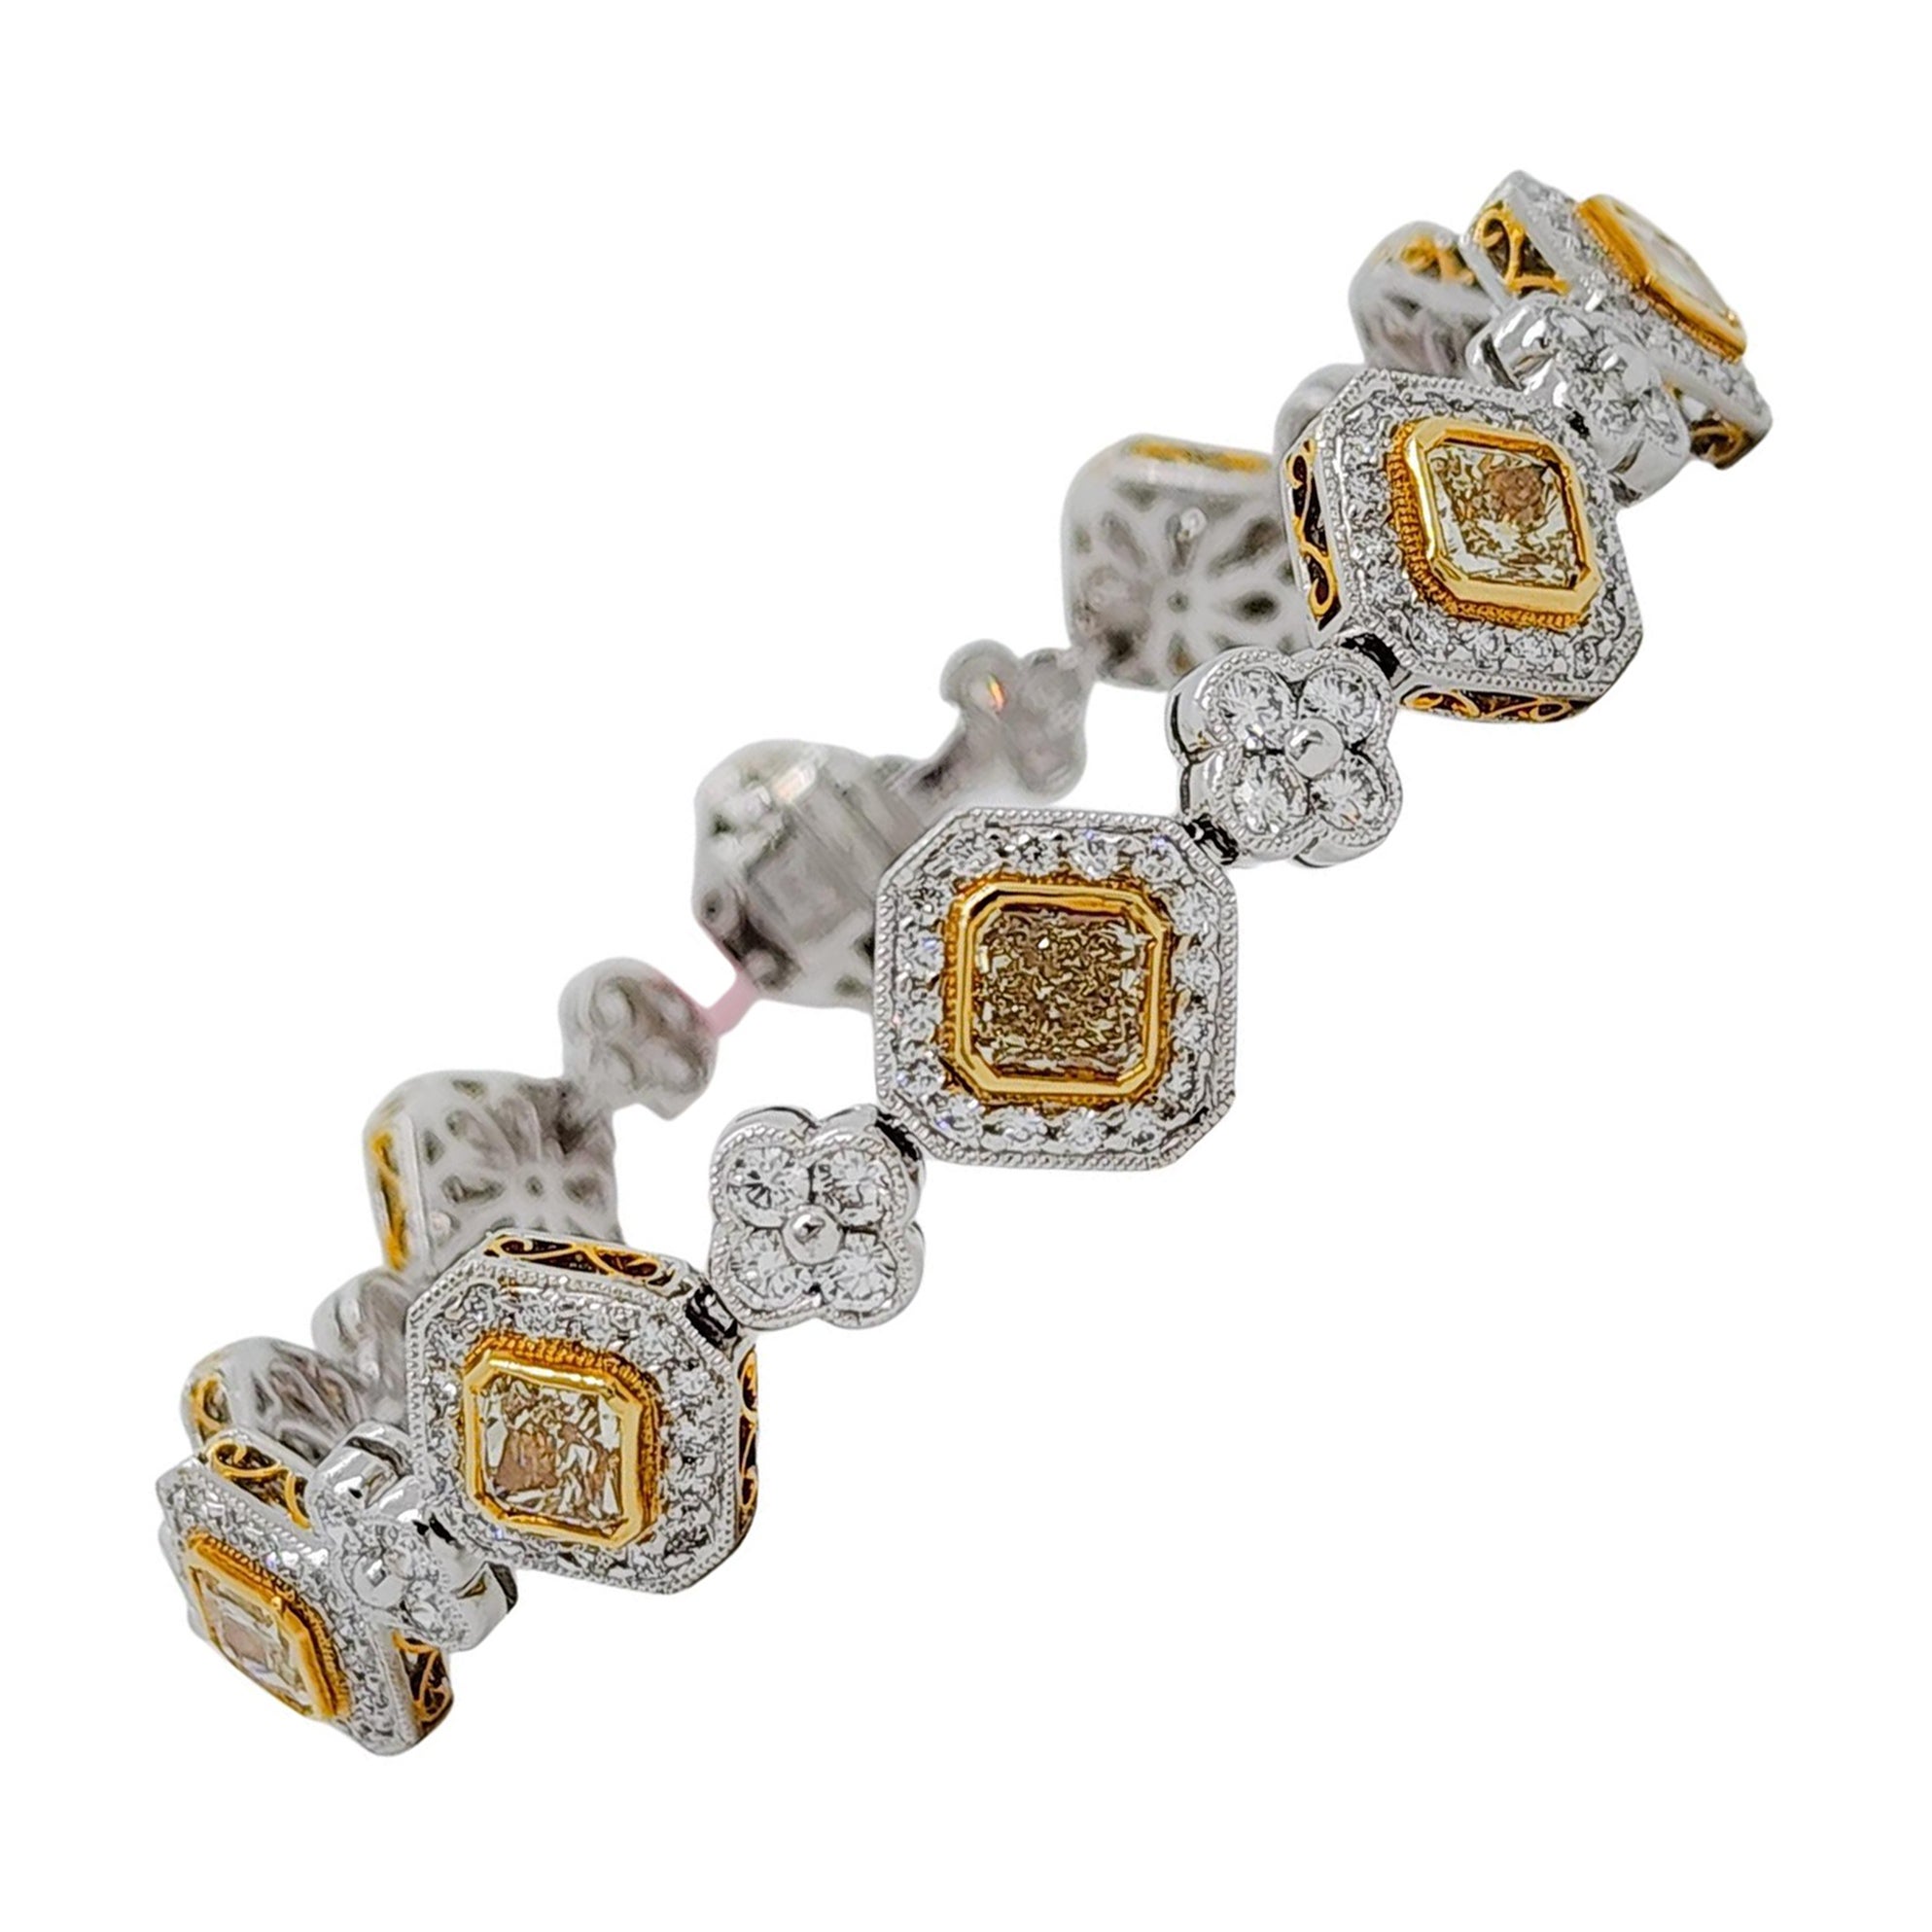 Yellow Diamond and White Diamond Bracelet in 18k